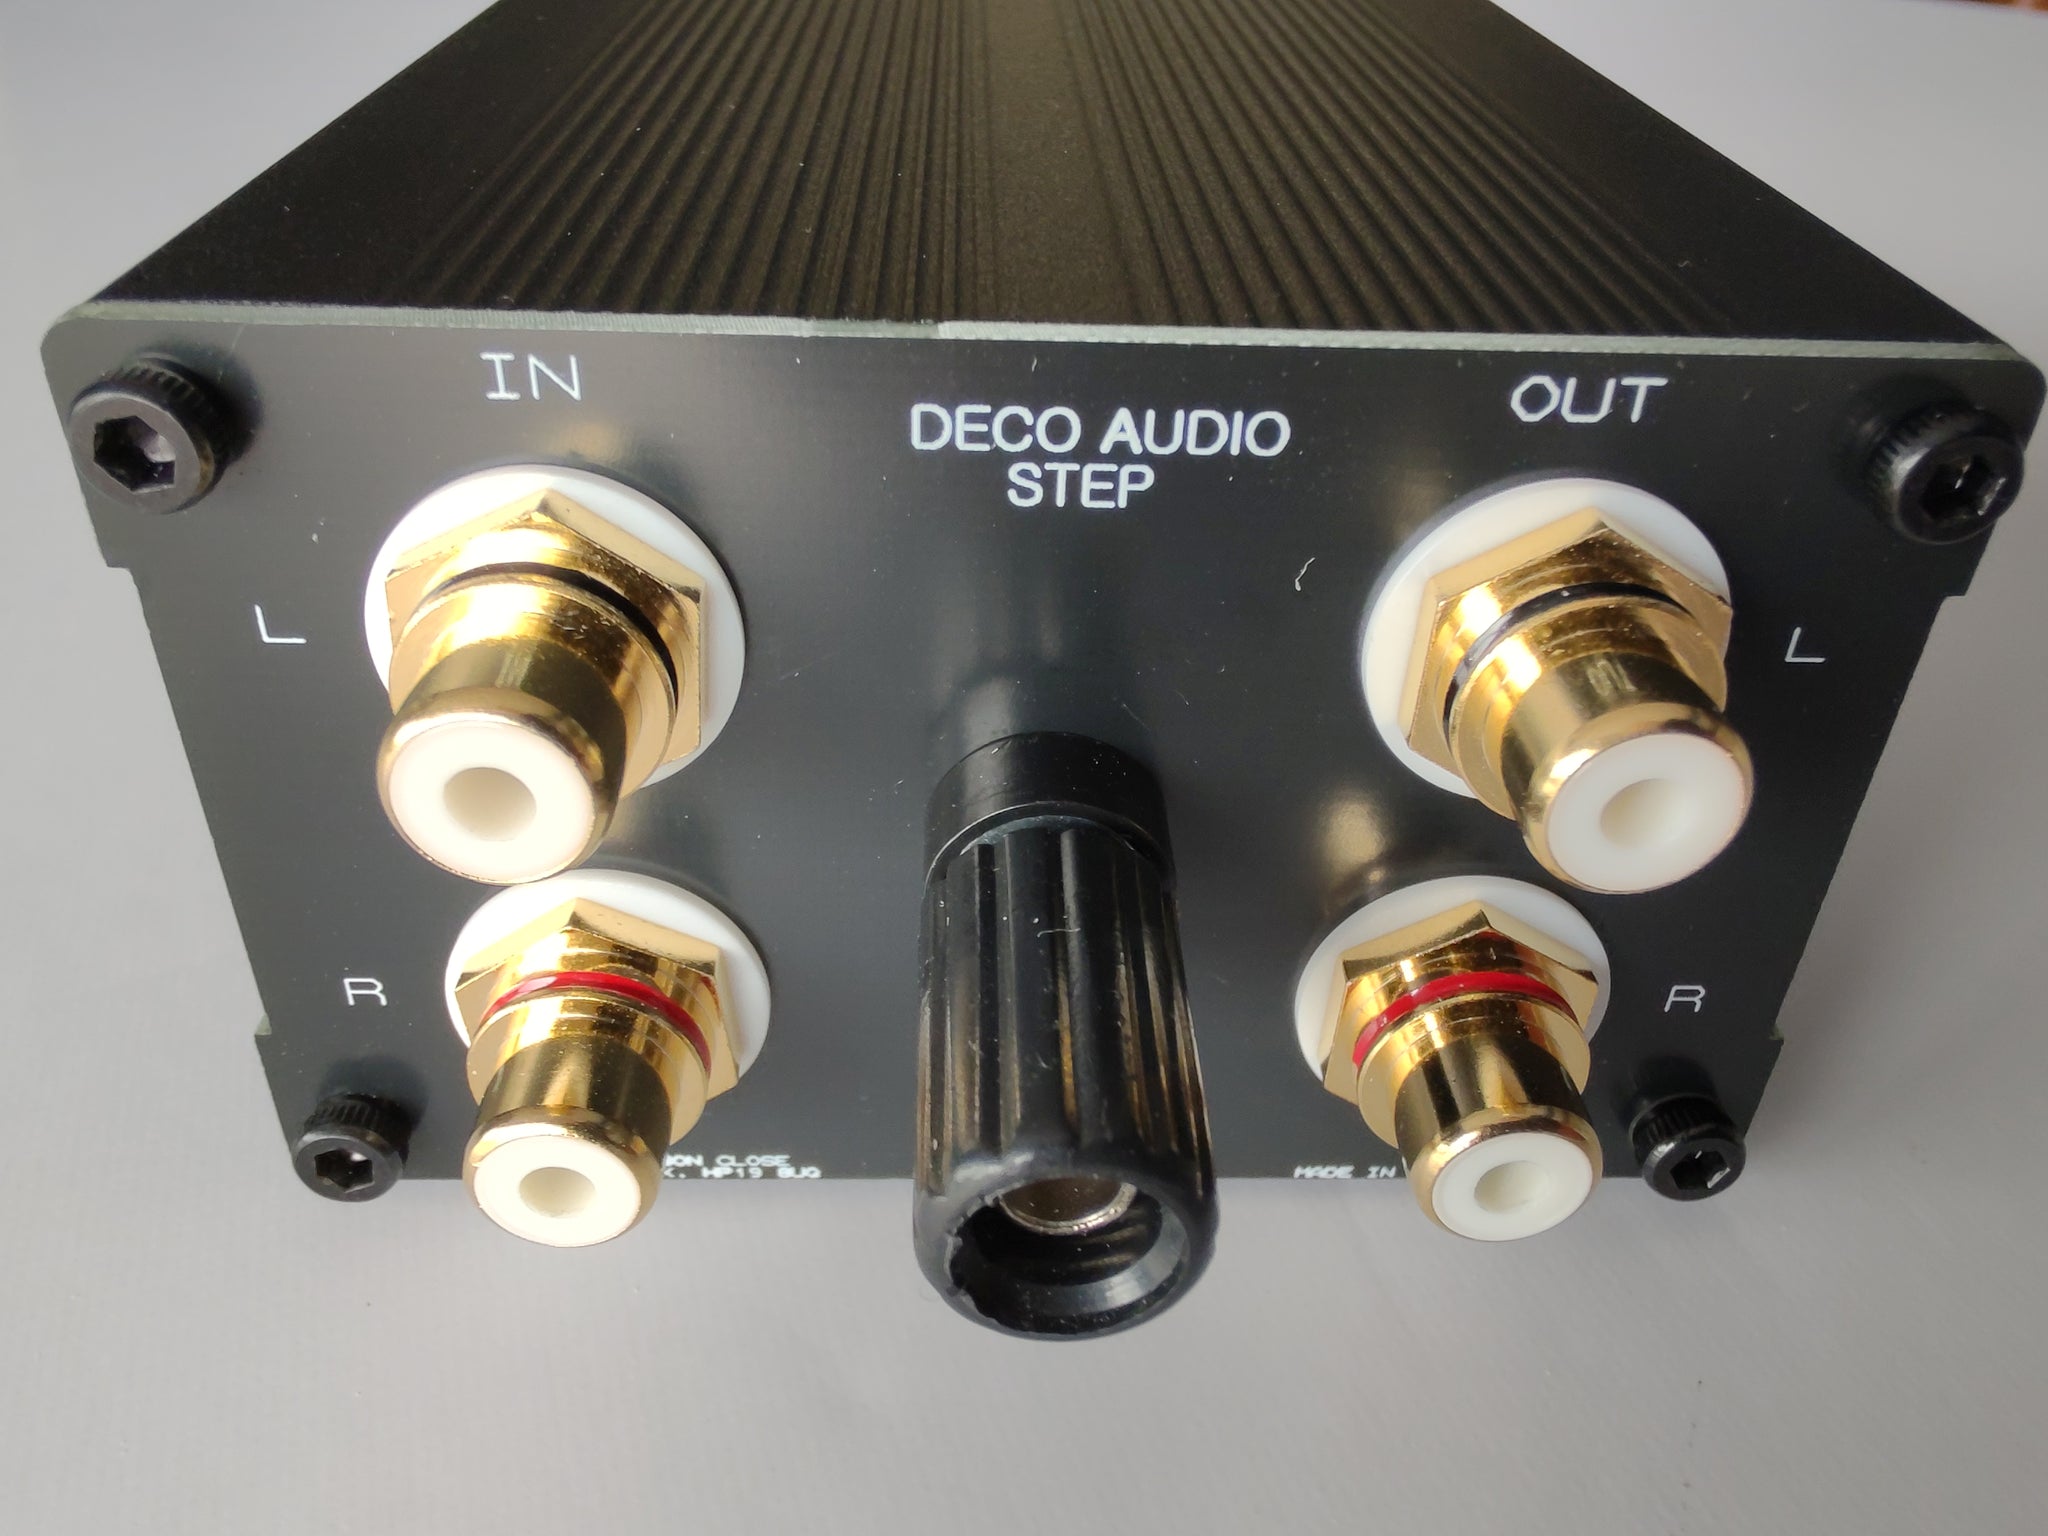 Deco audio products